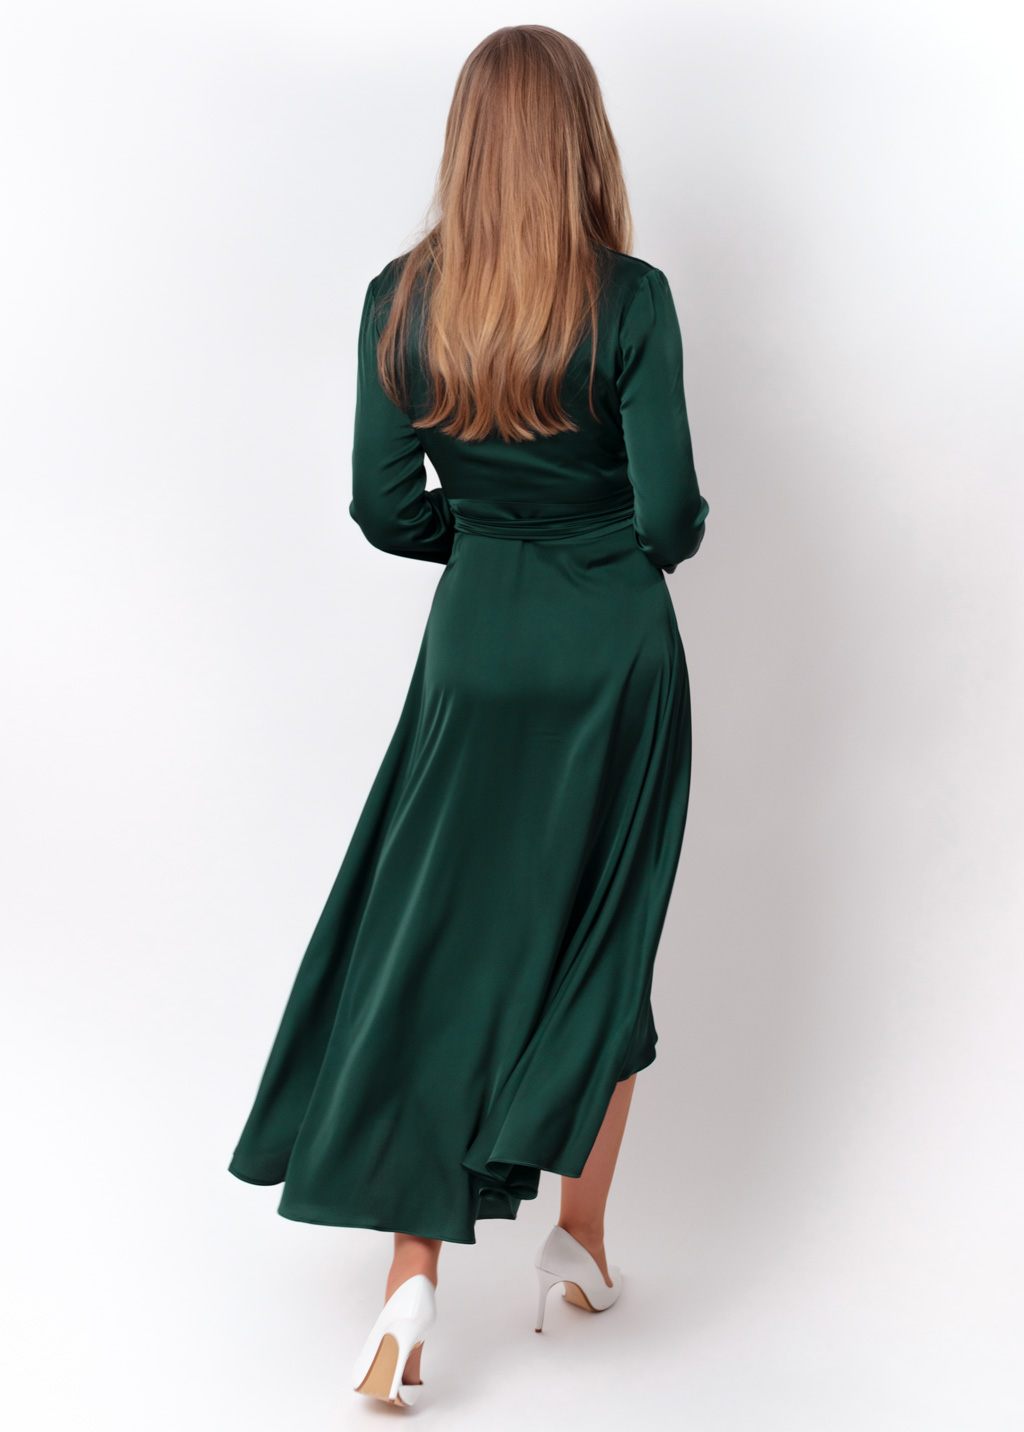 Forest green wrap dress